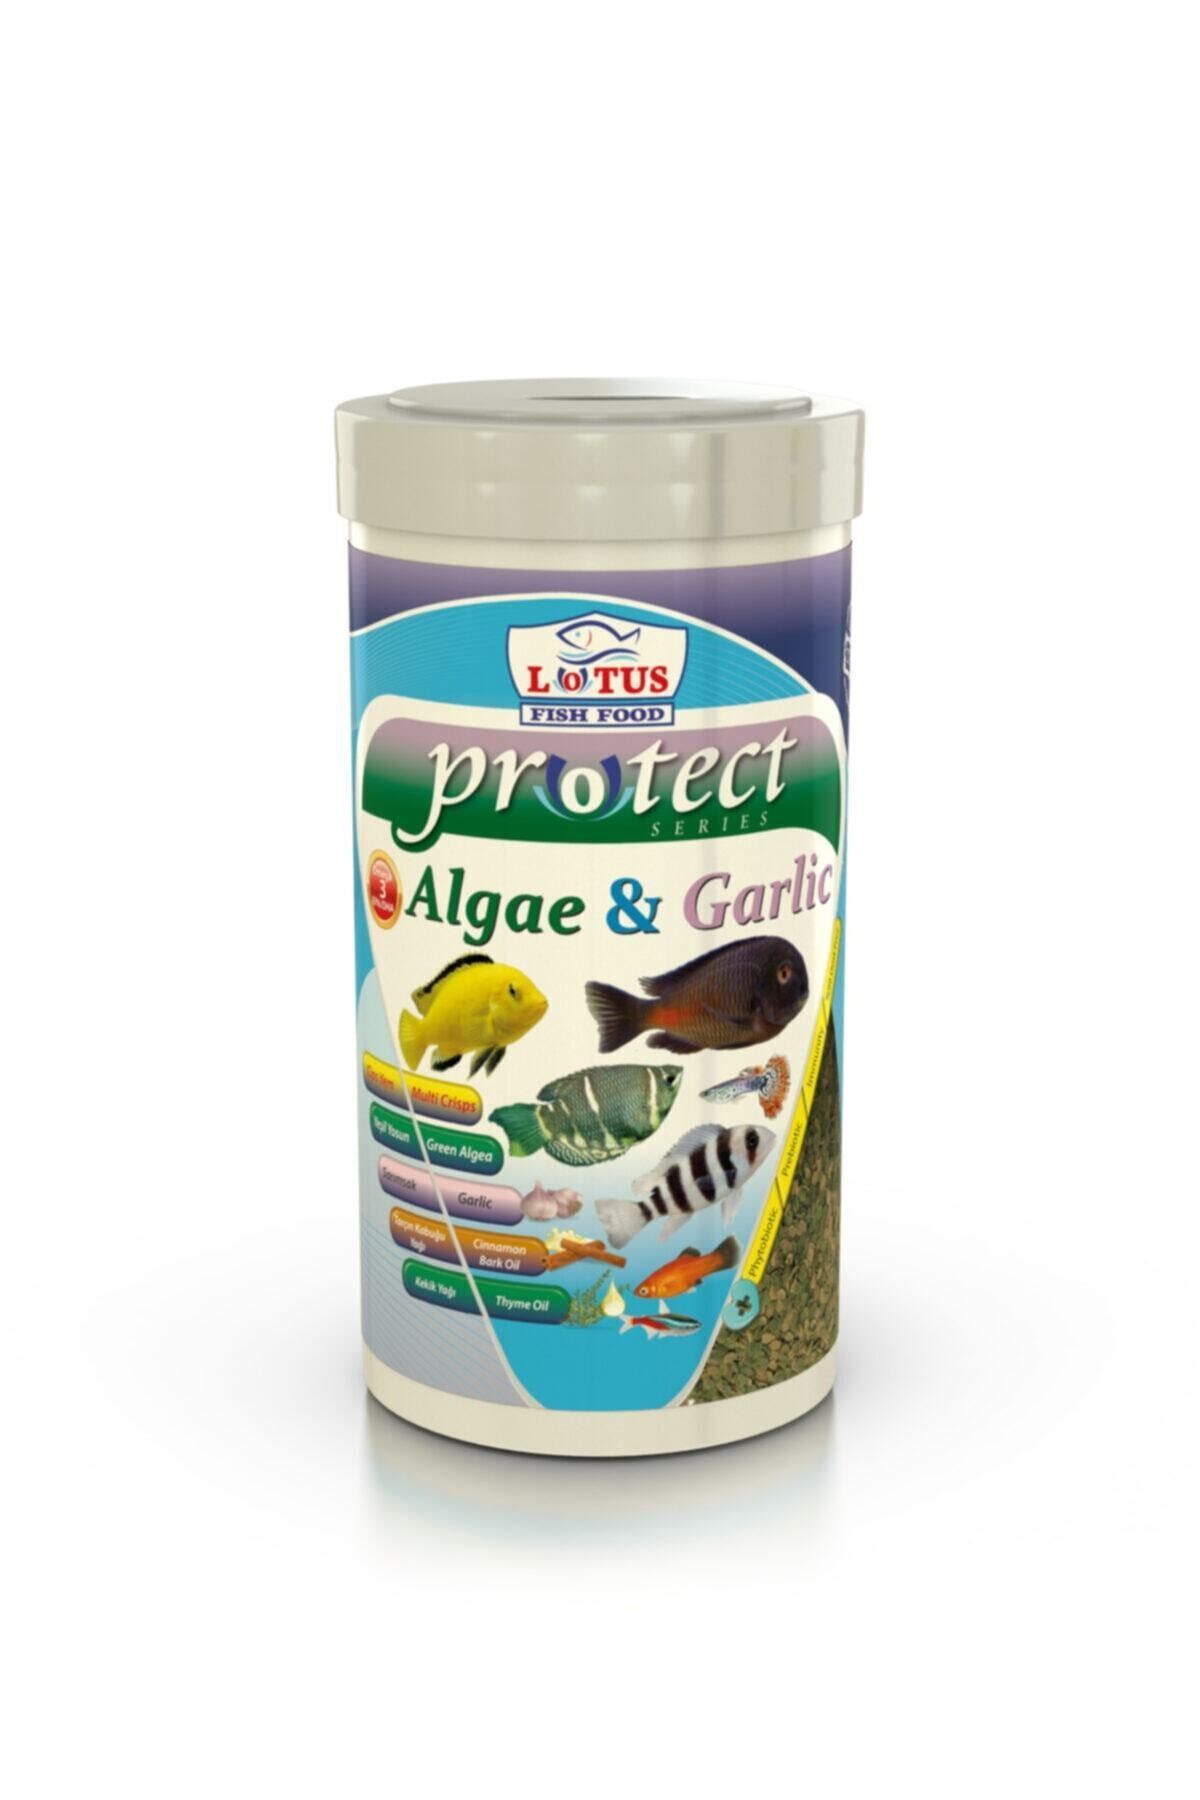 Lotus Protect Algae Garlic 100 Ml Pro Chips Akvaryum Balık Yemi